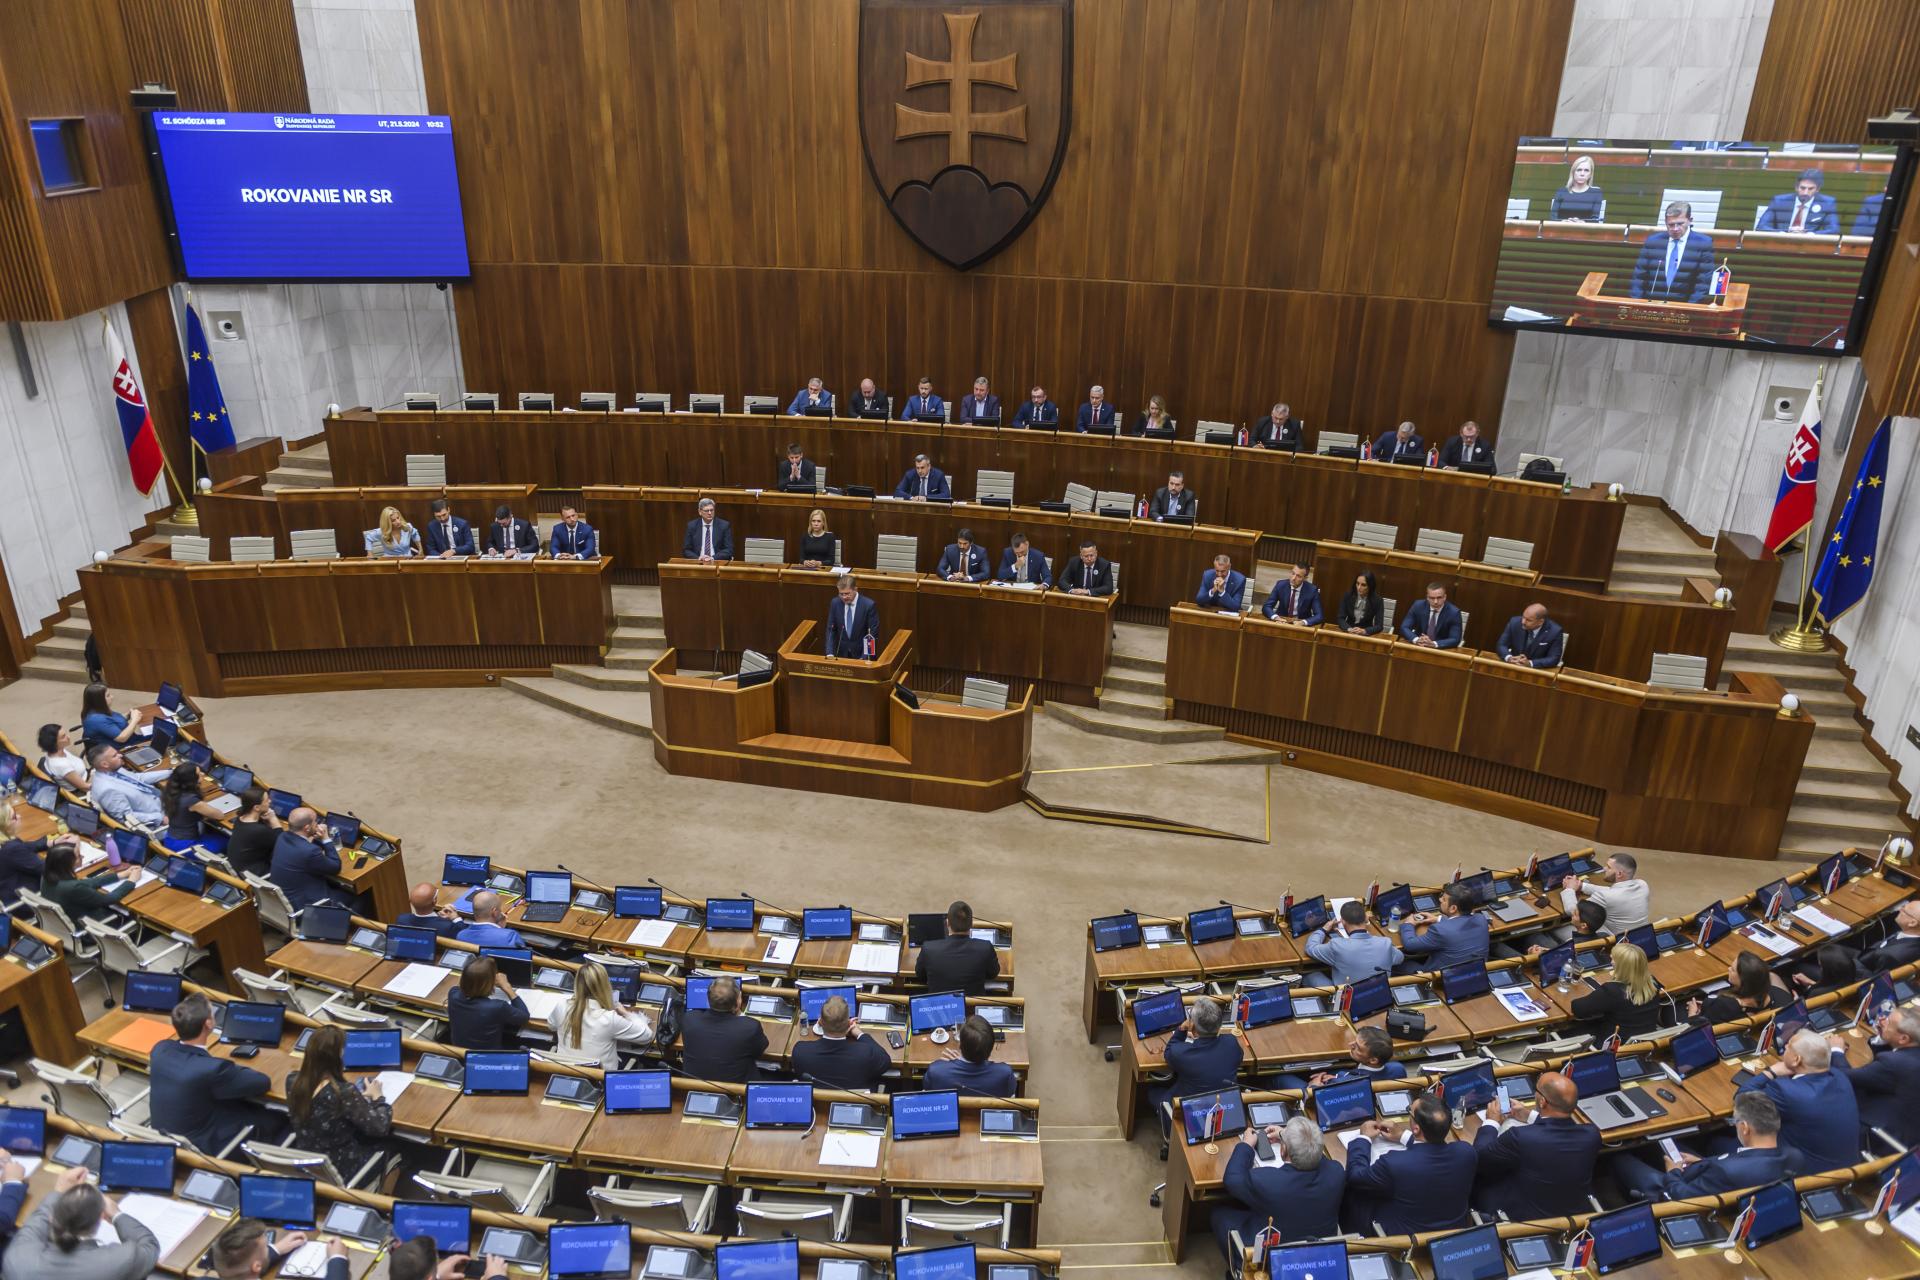 Parlament odsúdil útok na premiéra. Za uznesenie hlasovali všetci prítomní poslanci